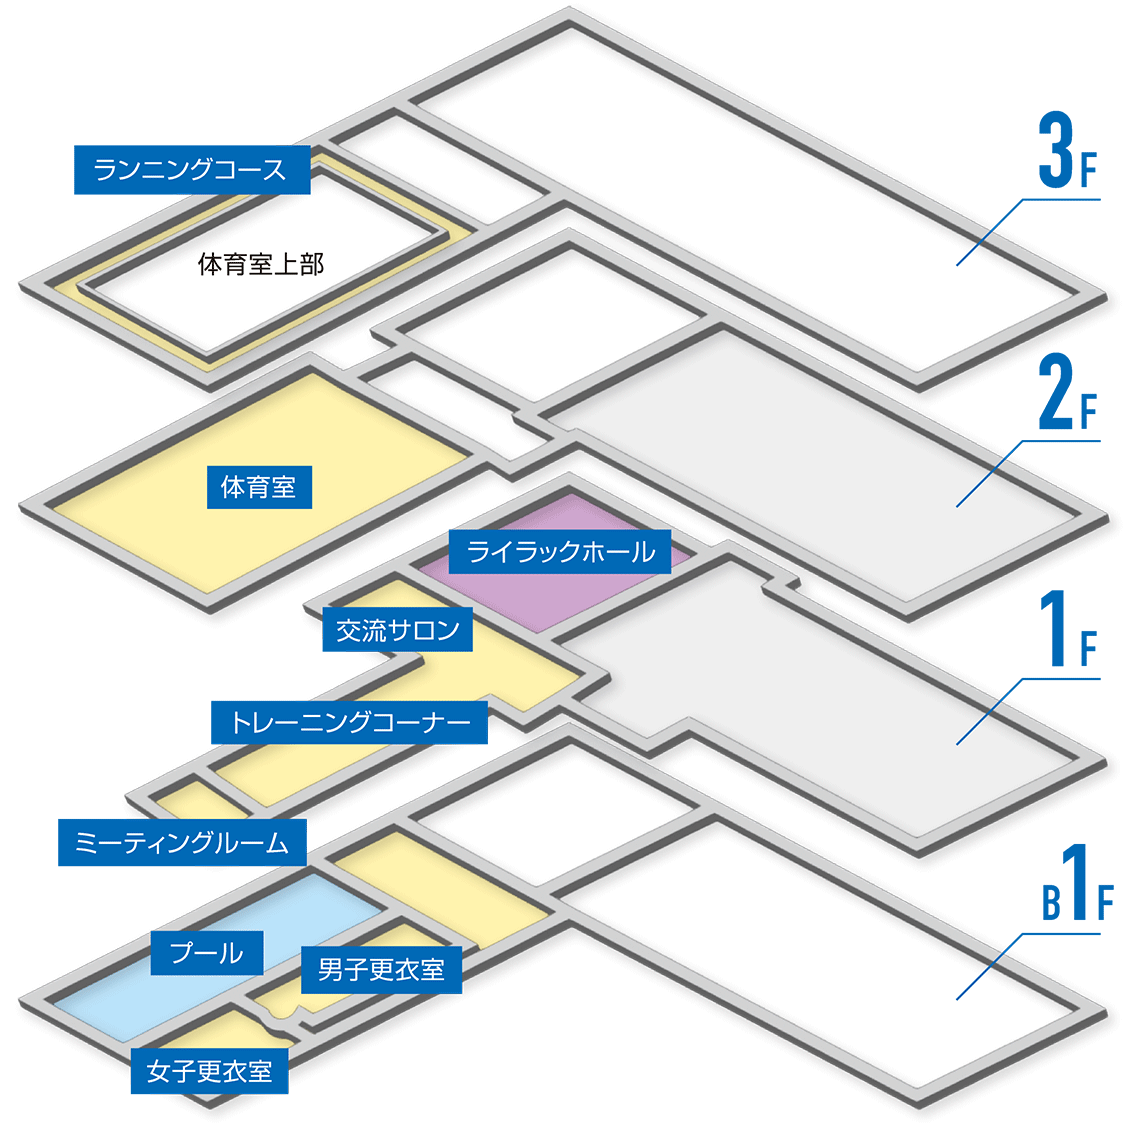 Floor guide image, each floor map